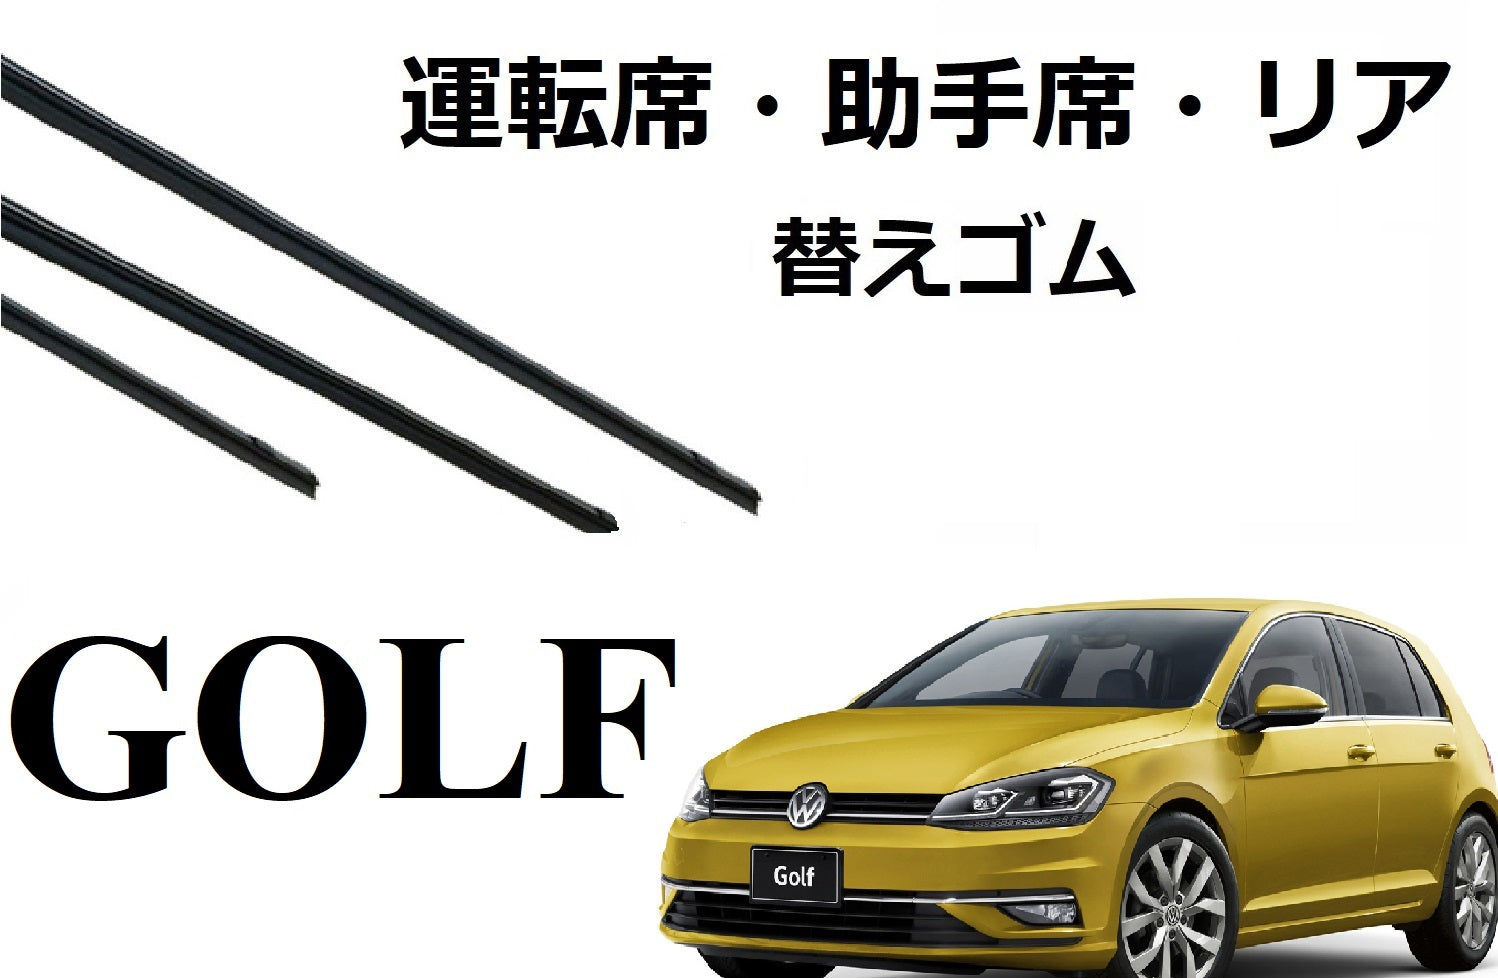 VW GOLF 5 6 7 適合サイズ ワイパー 替えゴム 純正互換品 セット 運転